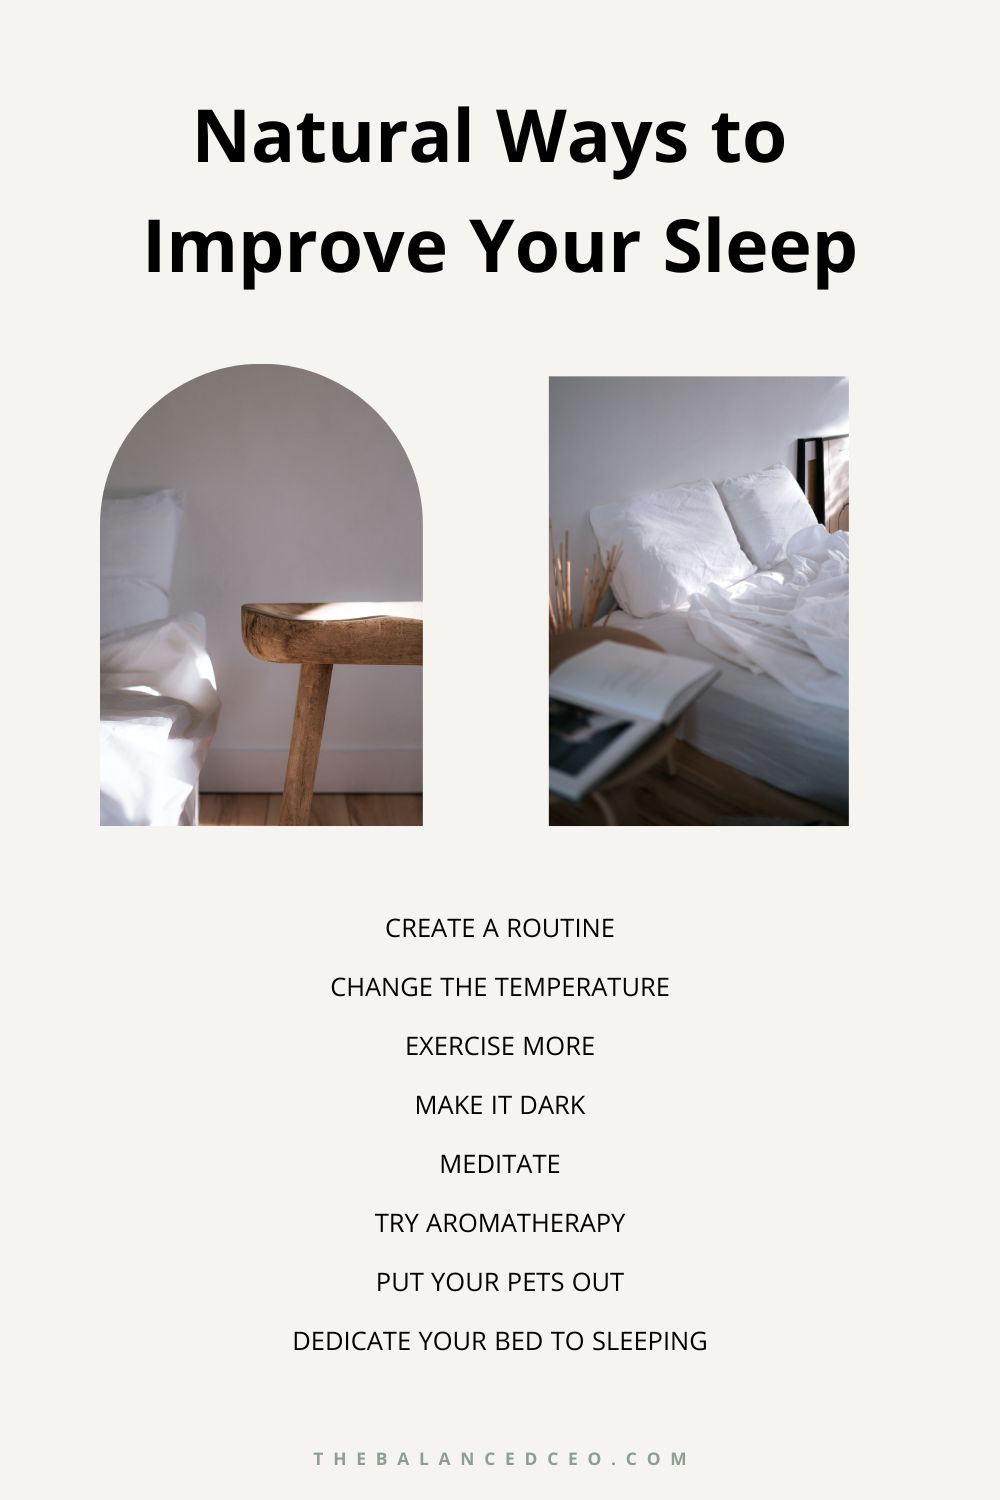 Natural Ways to Improve Your Sleep